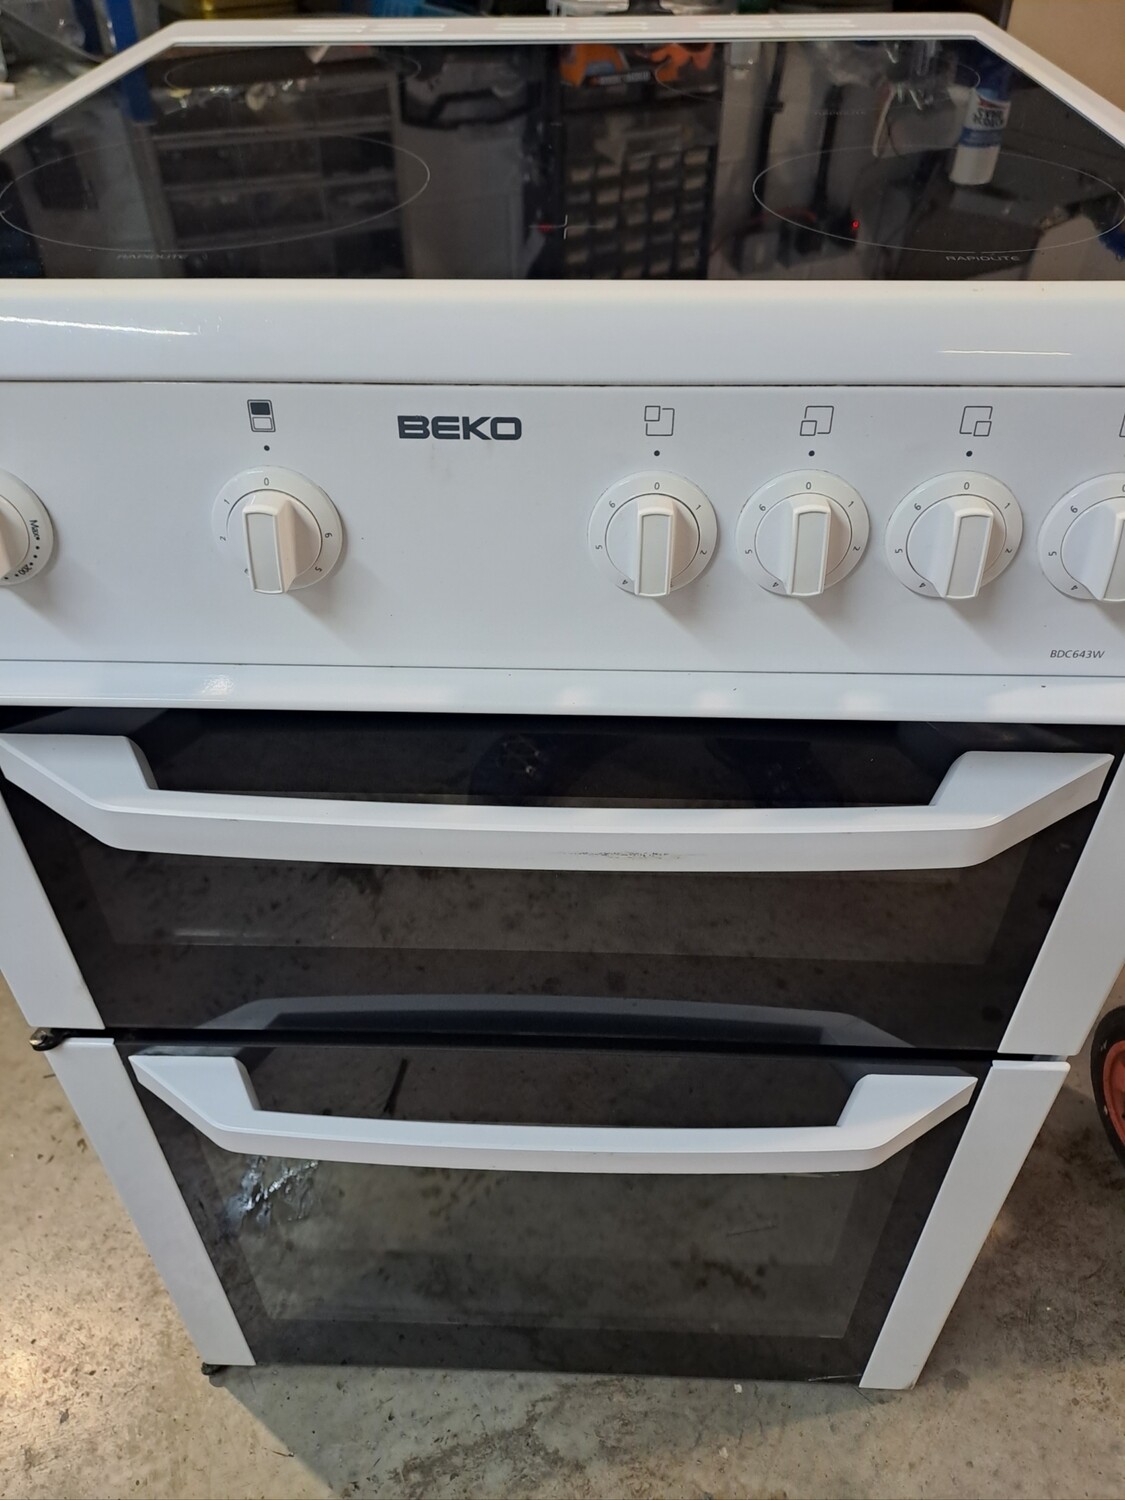 Beko BDC643W 60cm Electric Cooker Twin Cavity Ceramic Hob - White - Refurbished 6 Month Guarantee